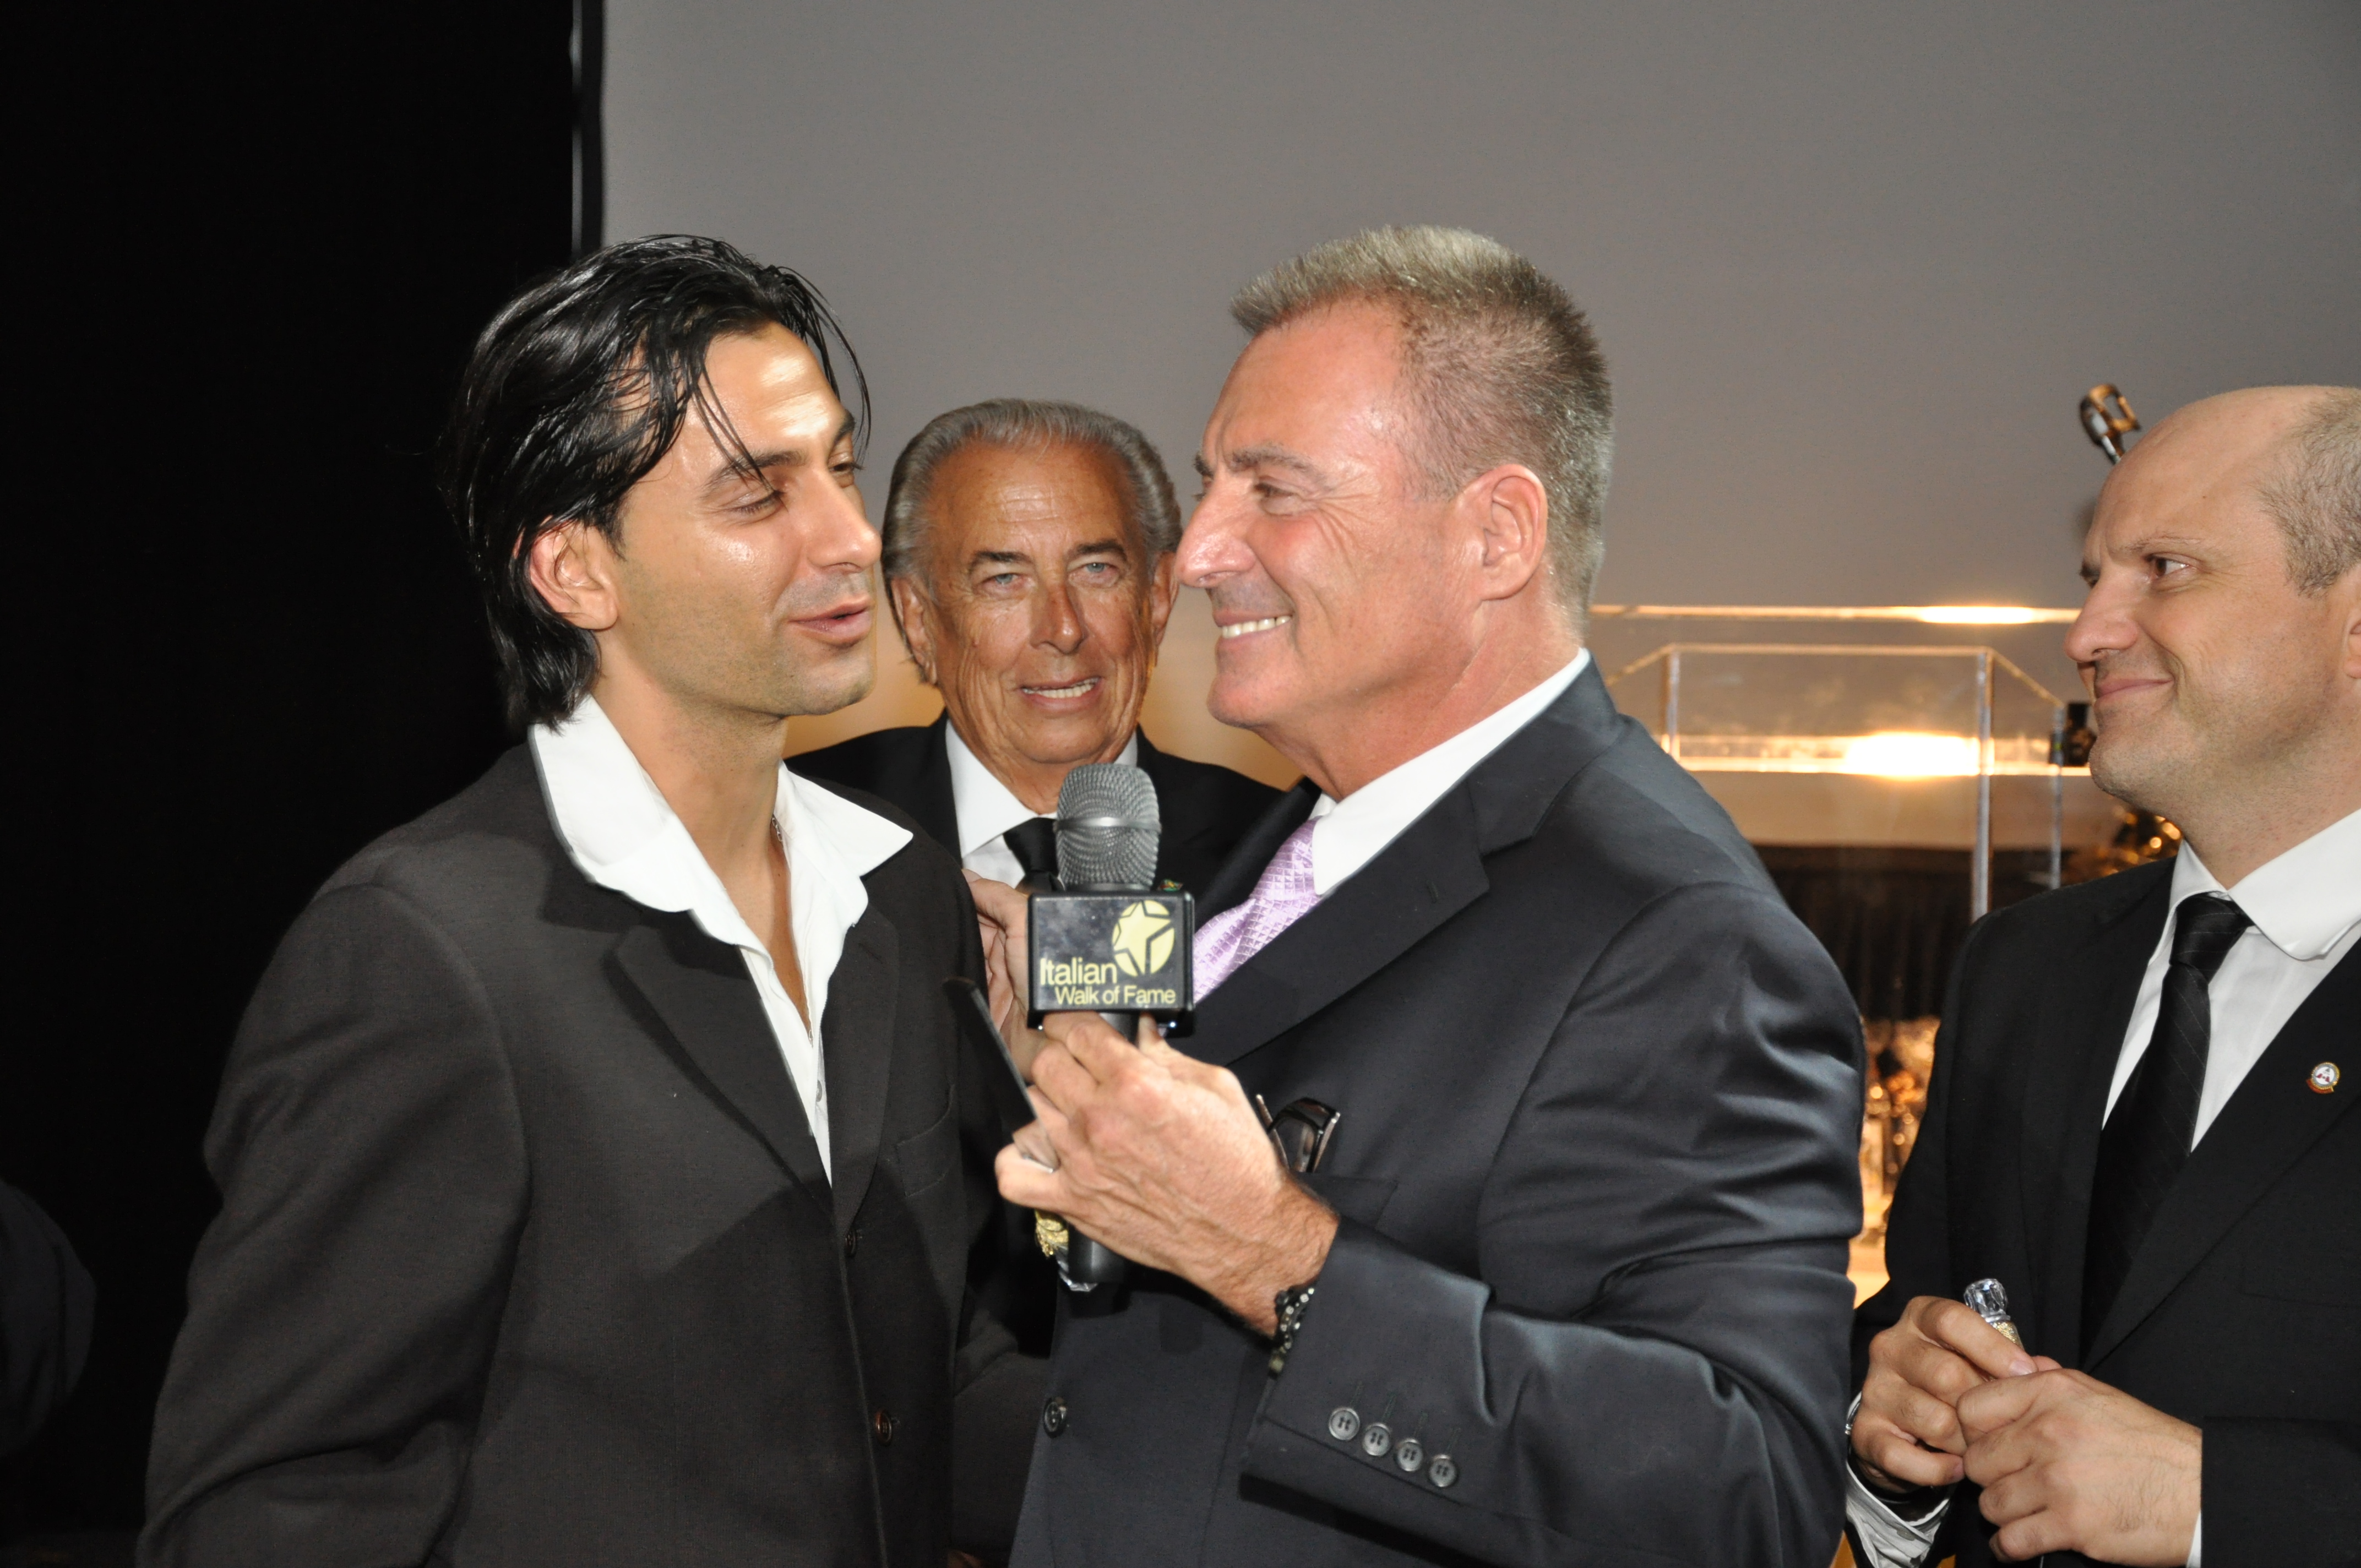 Walk of Fame with Armand Assante, Frank Mancuso and Enrico Colantoni